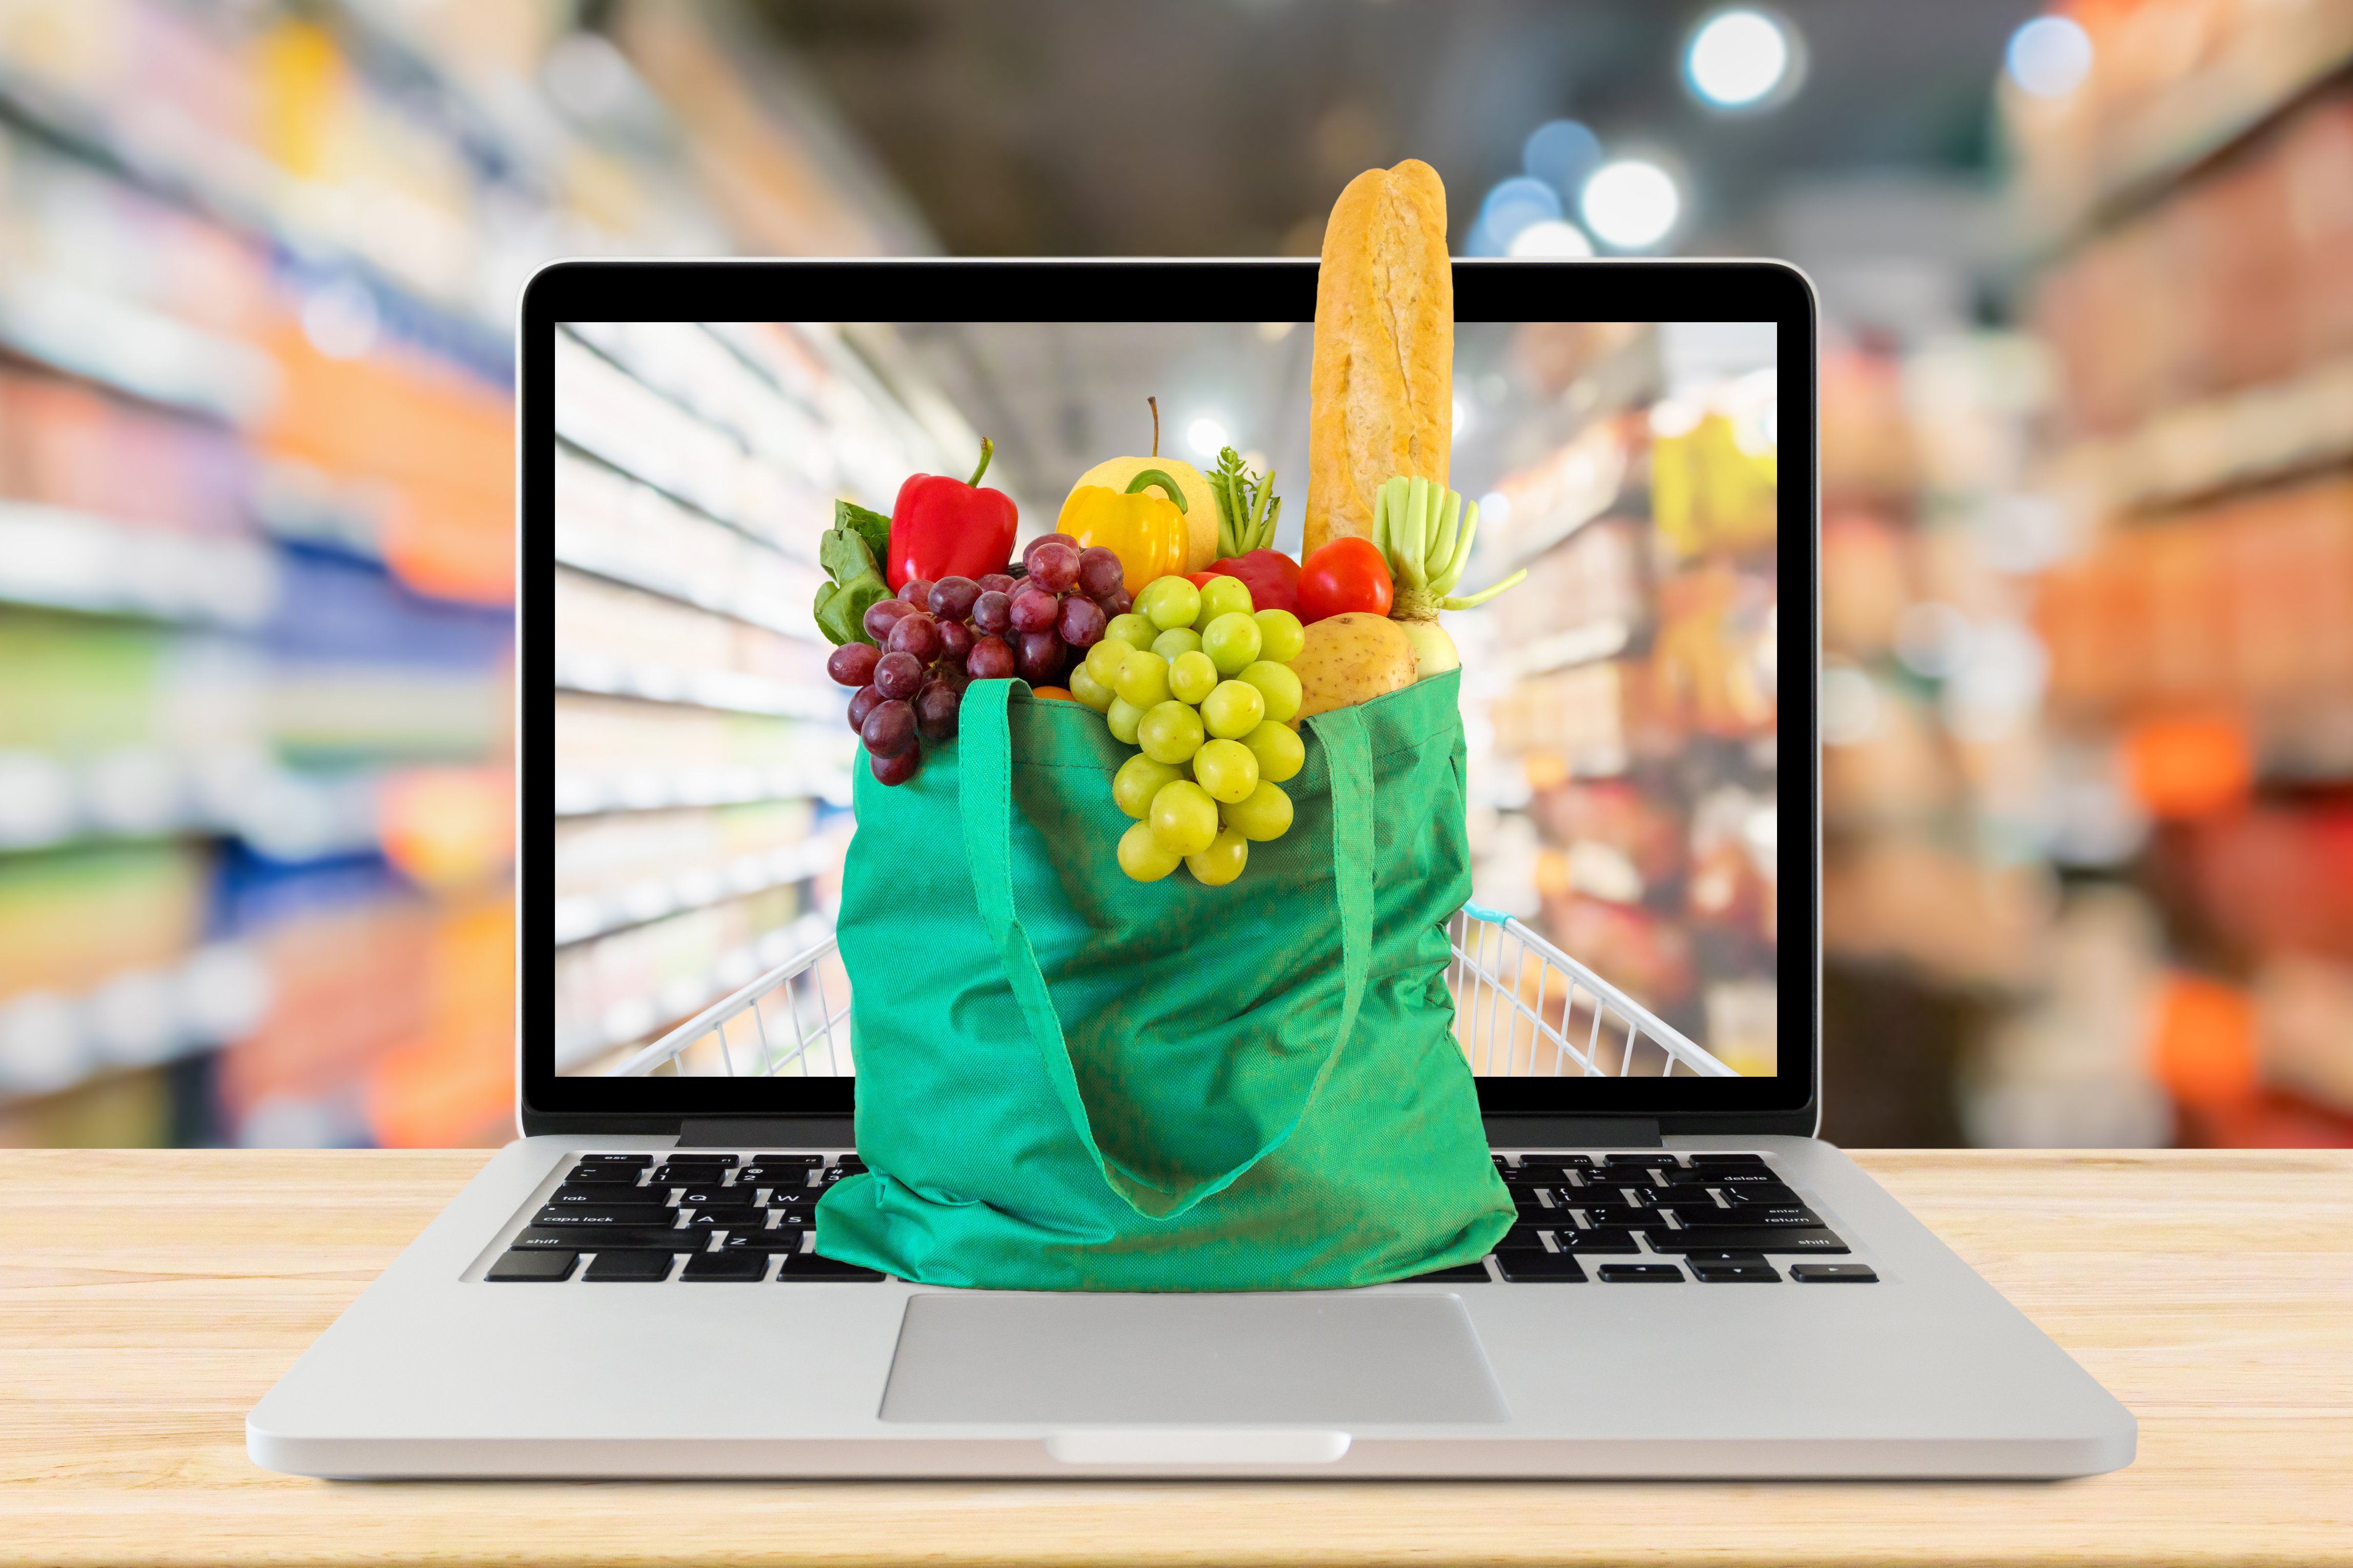 Интернет покупка продуктов. Покупки в интернете. Интернет торговля в интернете. Покупки еды в интернете.